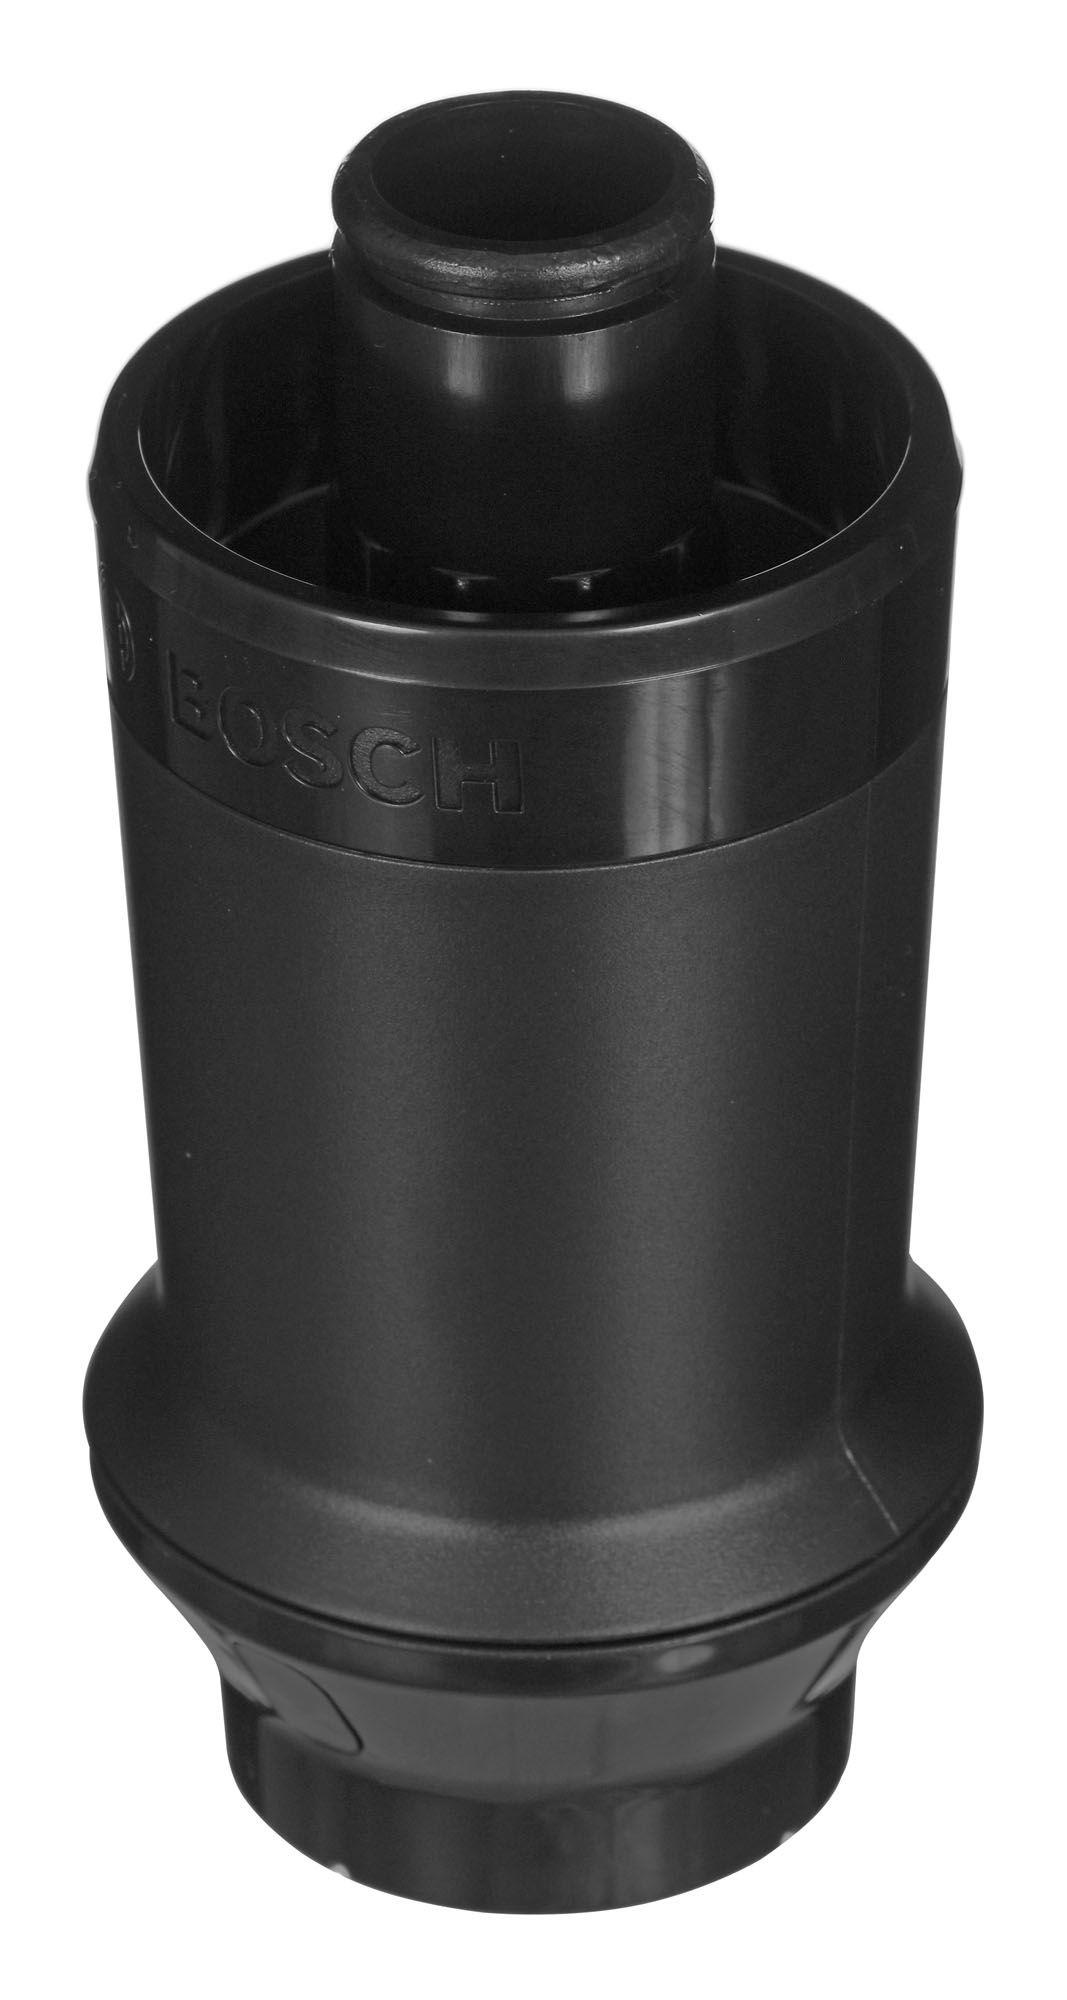 Bosch MS8CM61V1 blender Hand mixer 1000 W Black, Stainless steel, Transparent